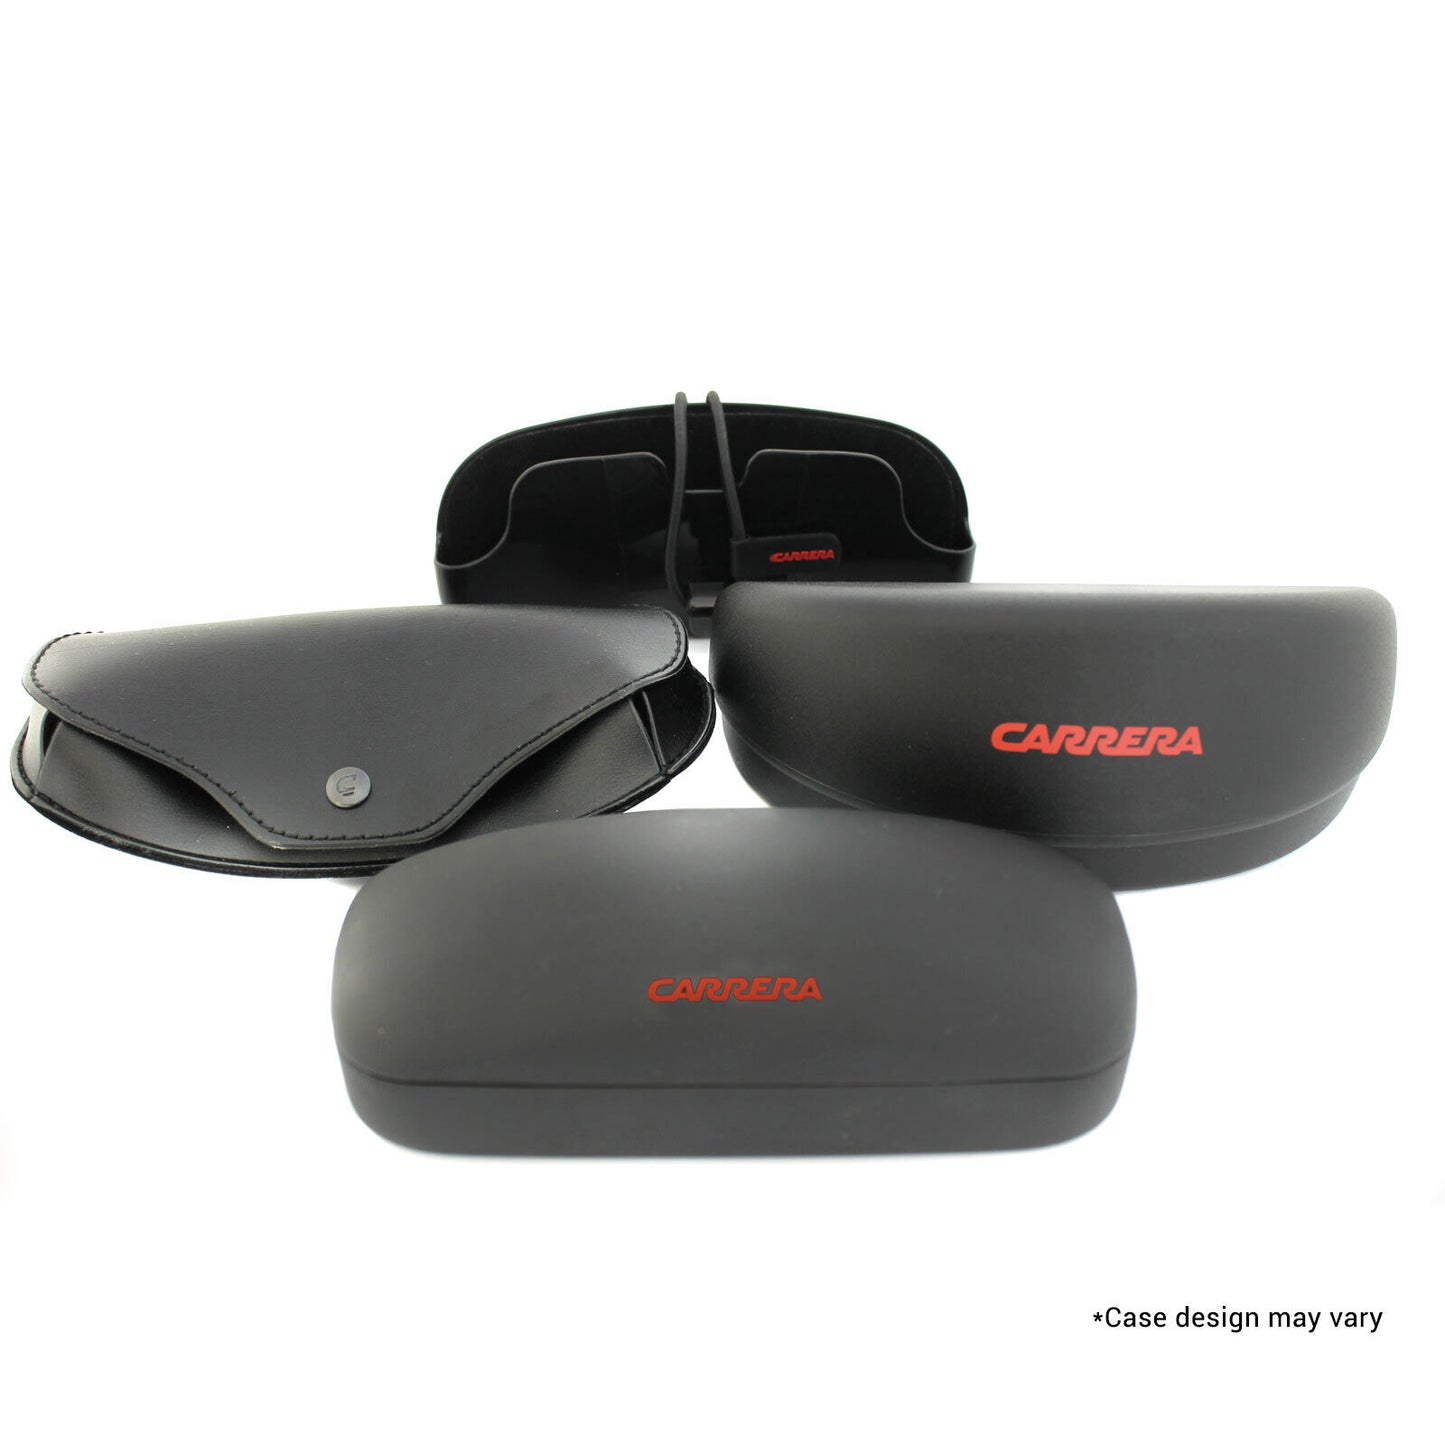 Carrera CARRERA 8862-0086 00 55mm New Eyeglasses